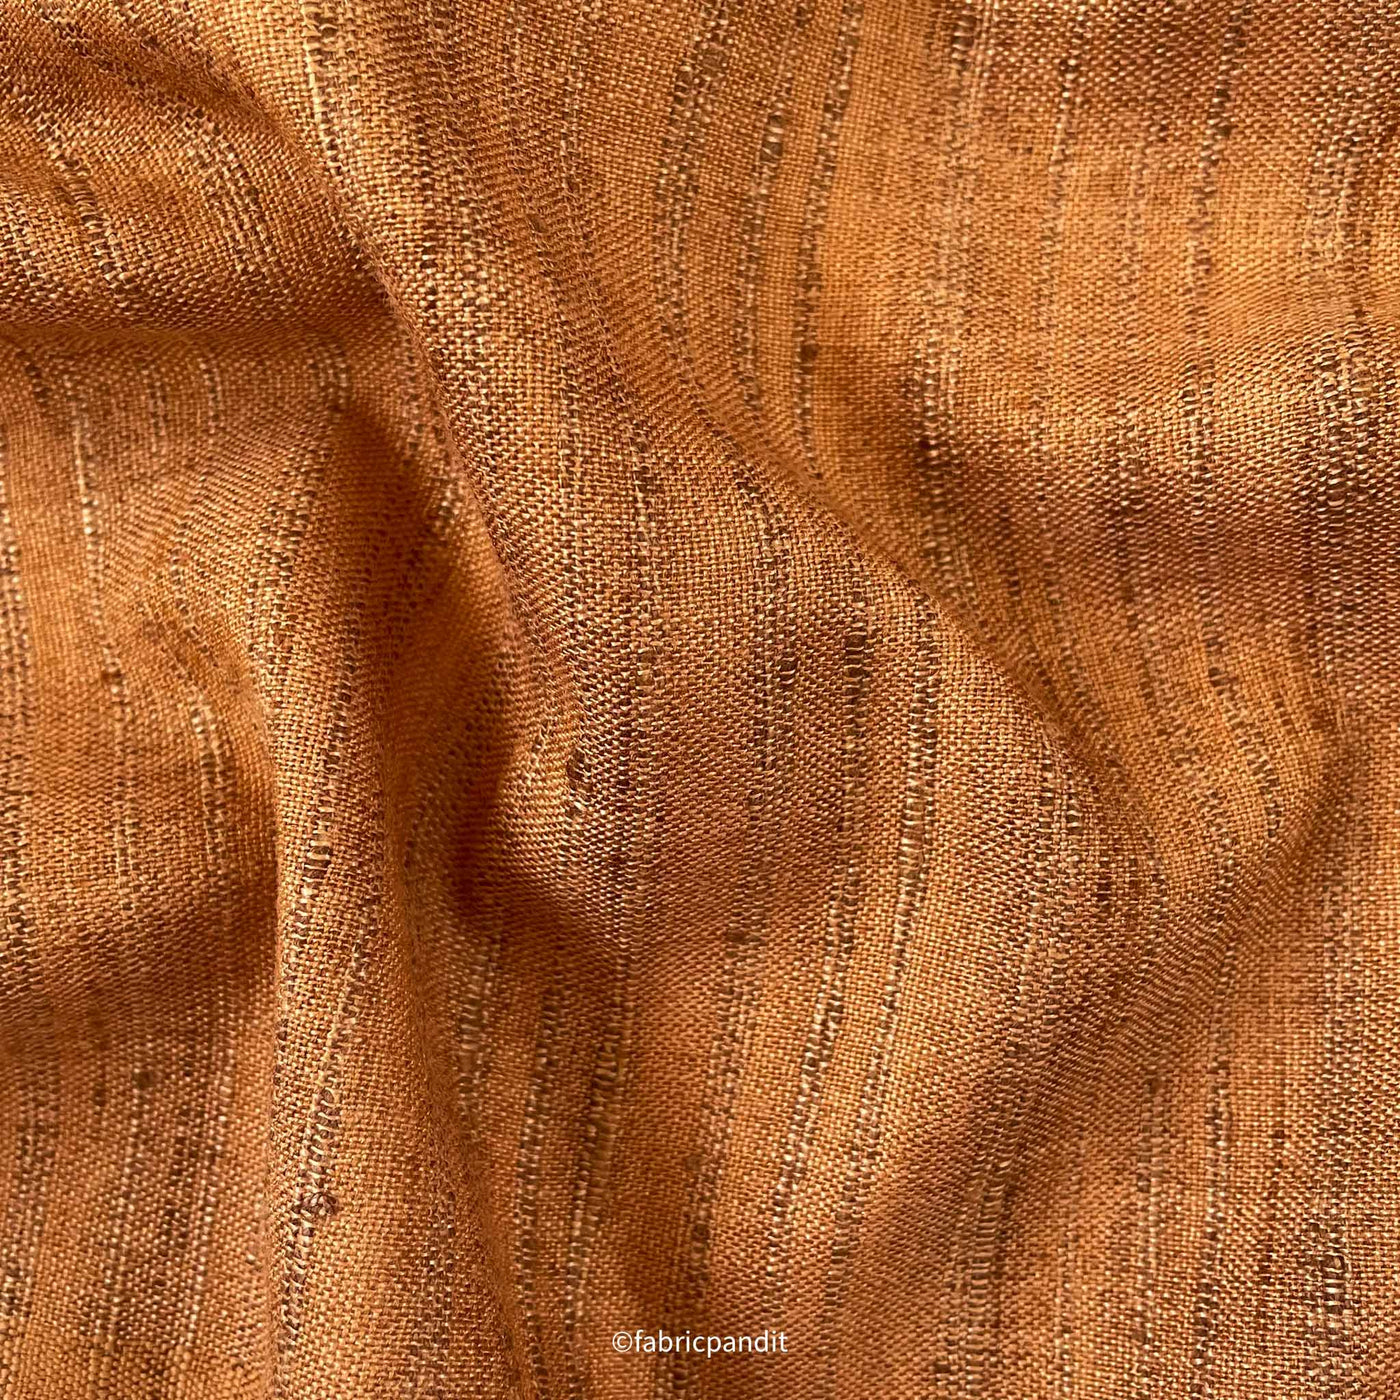 Fabric Pandit Fabric Rust Color Bhagalpuri Woven Cotton Slub Kurta Fabric (Width 58 Inches)